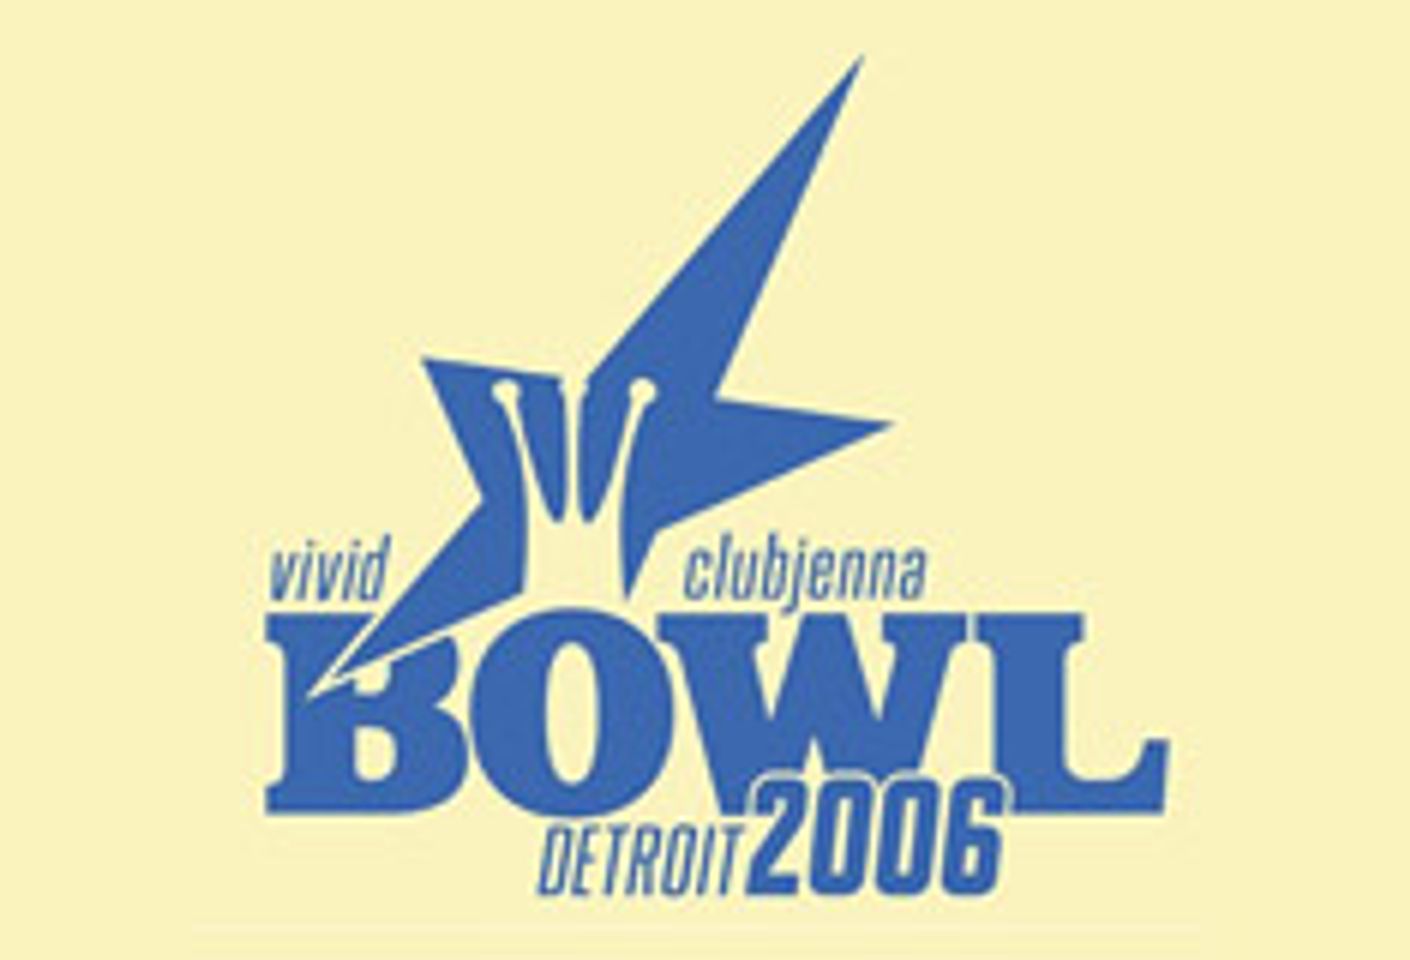 Vivid/Club Jenna Bowl Party Set for Detroit